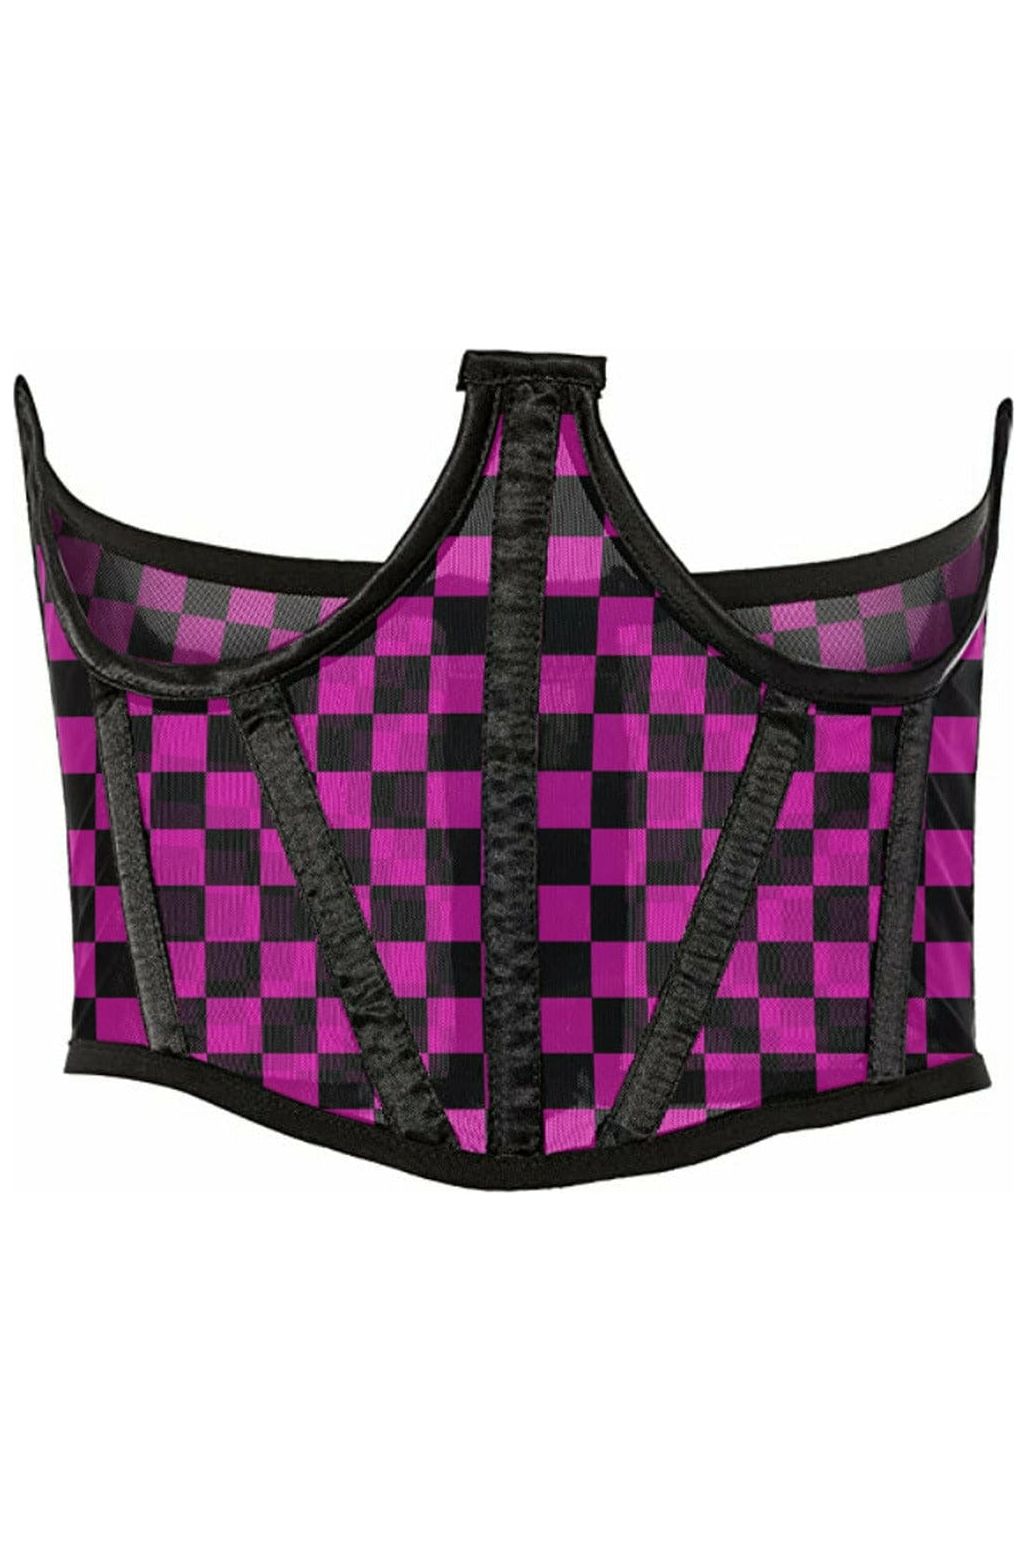 Lavish Neon Pink/Black Checker Print Mesh Open Cup Waist Cincher